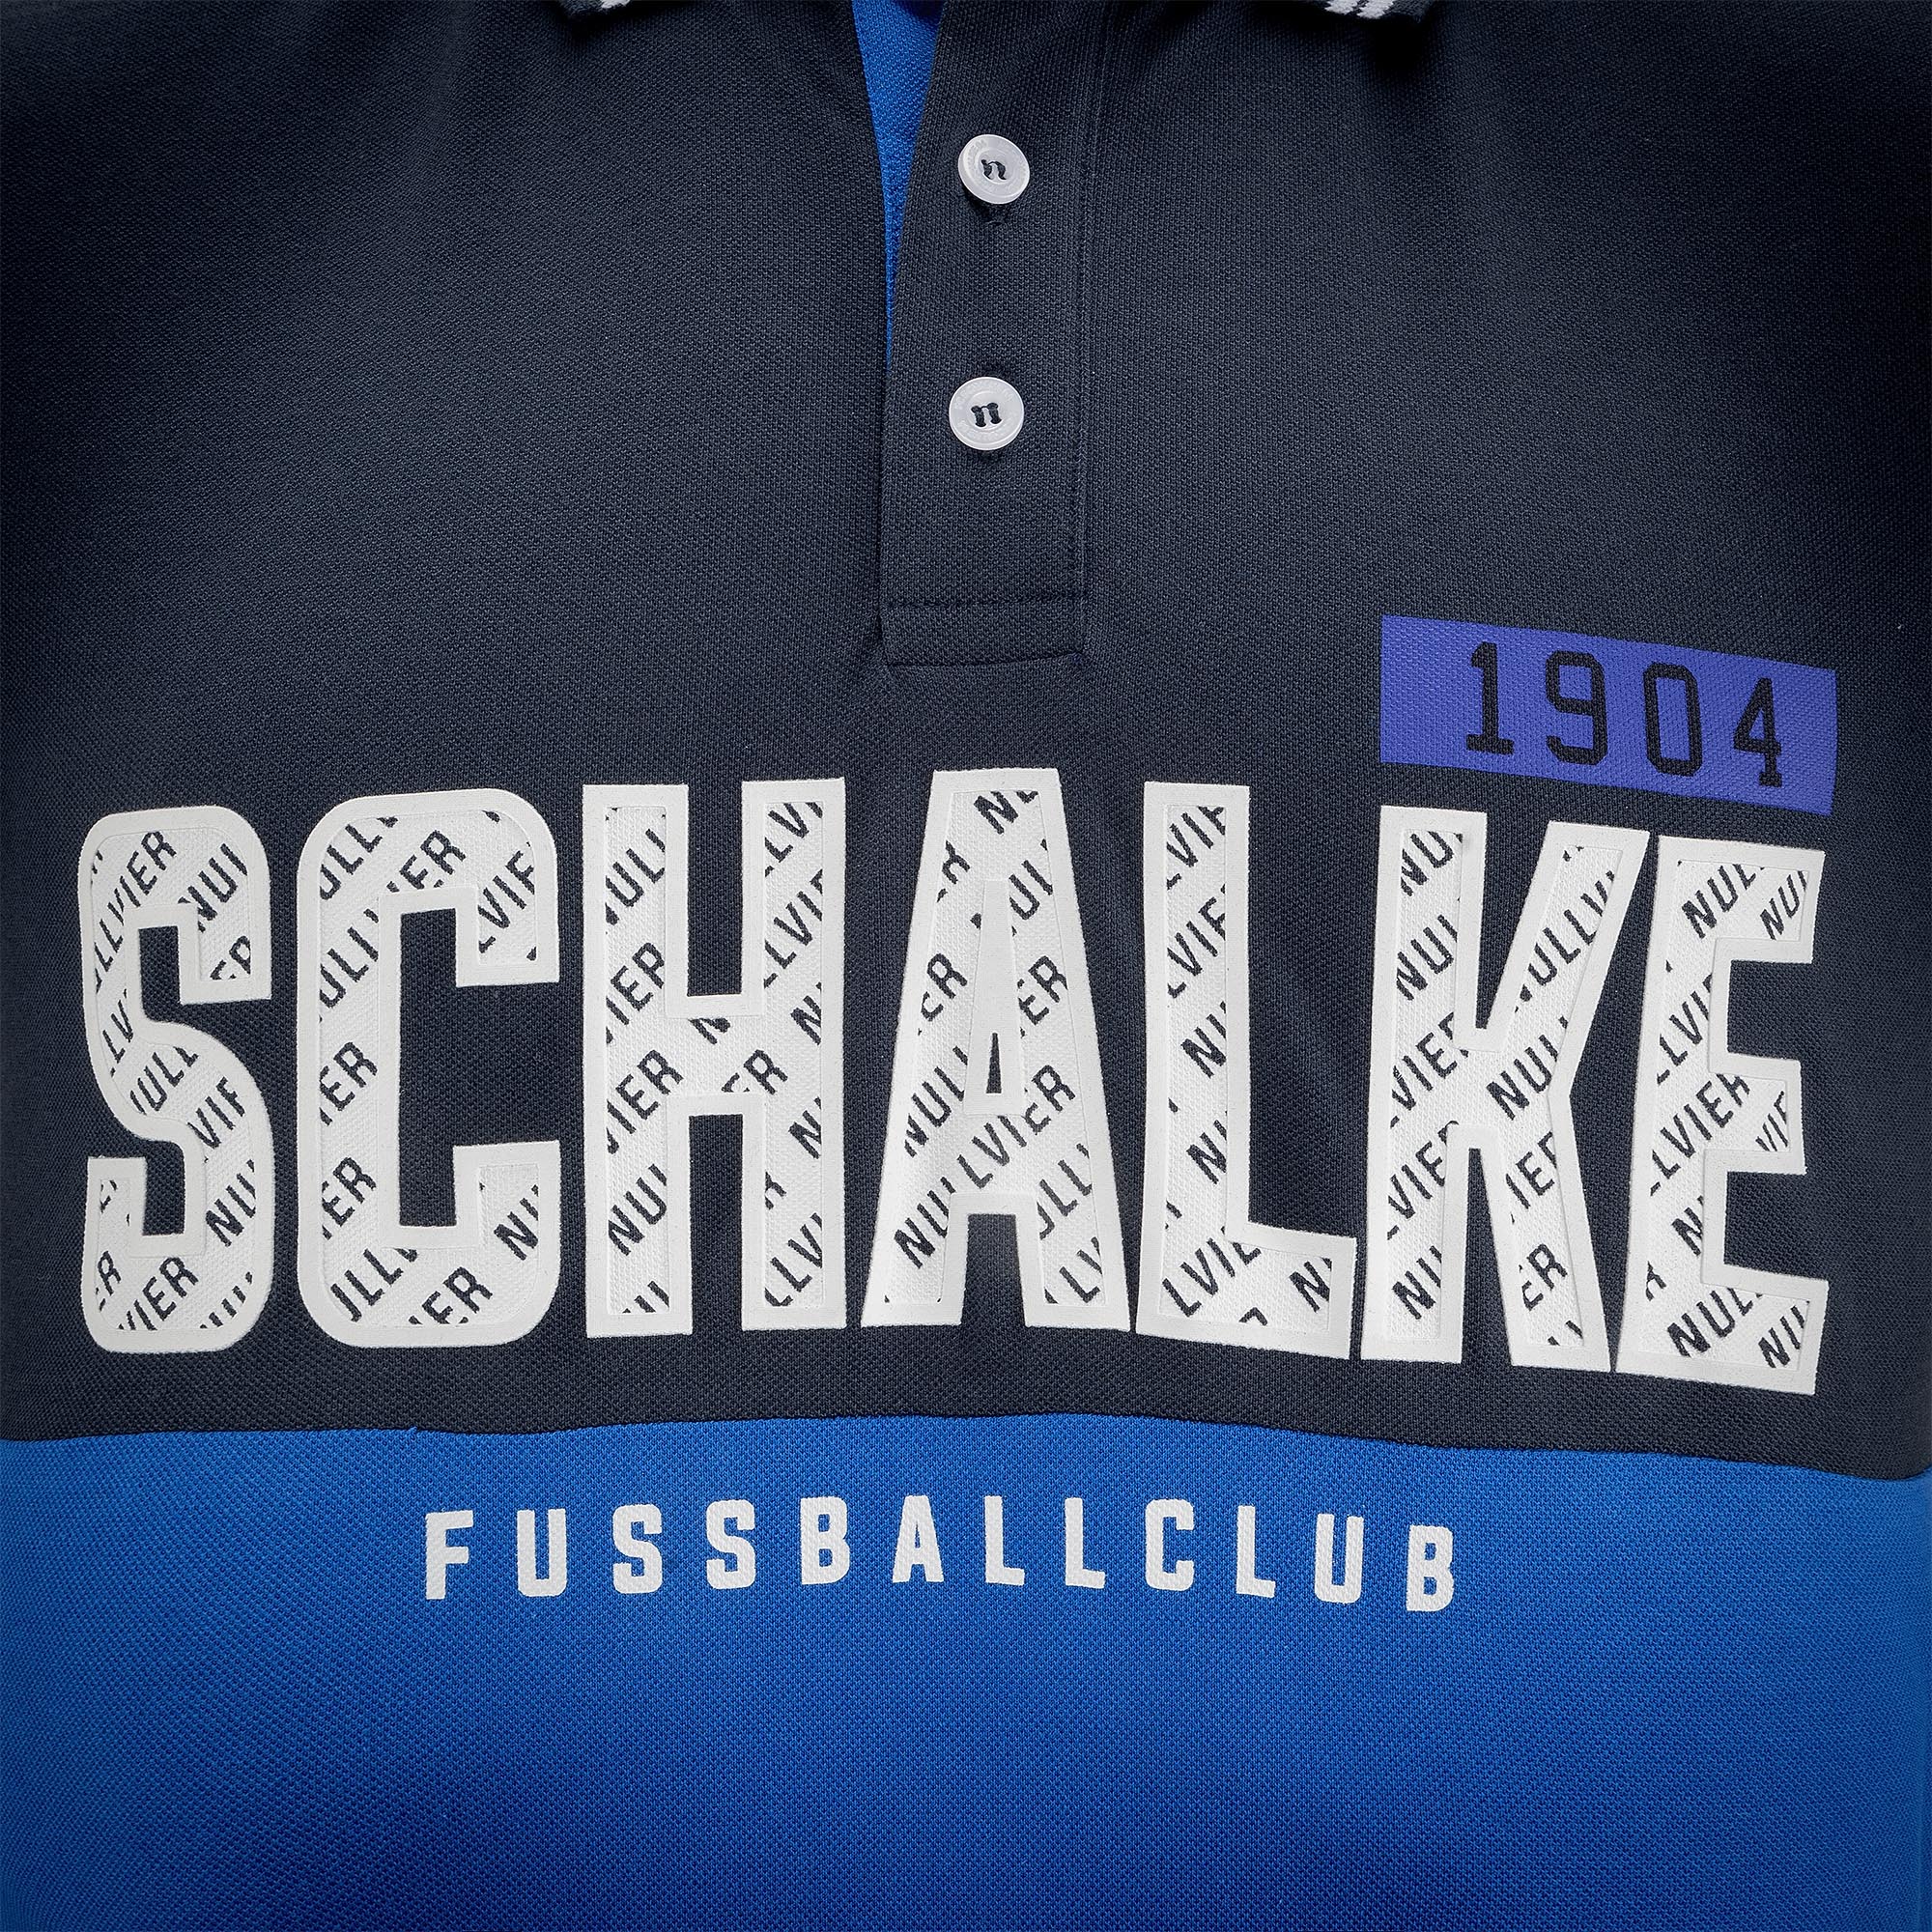 Polo Schalke Fußballclub